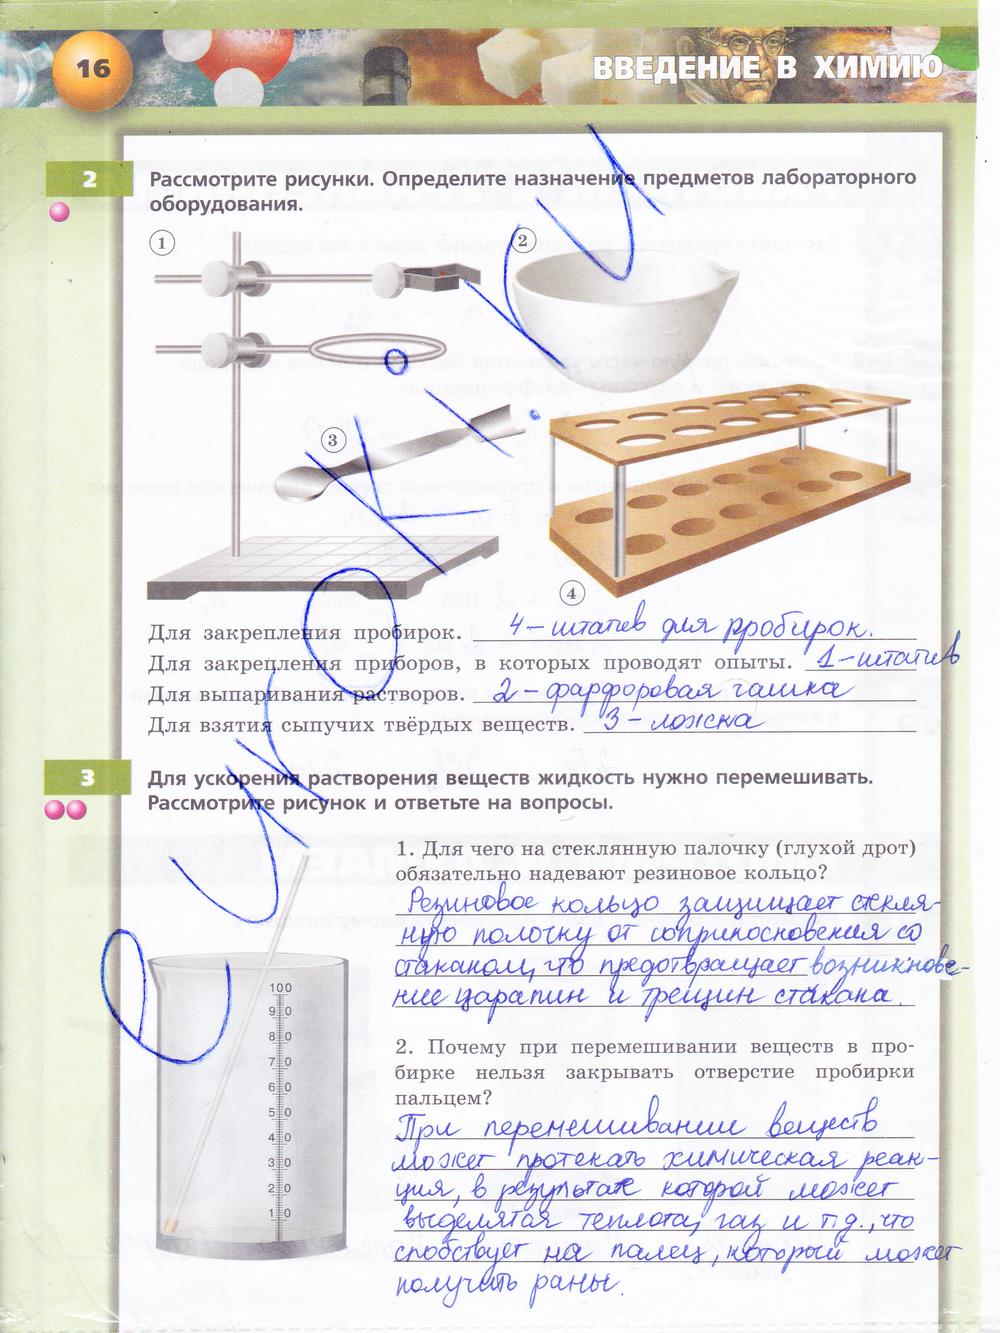 гдз 8 класс тетрадь-тренажёр страница 16 химия Гара